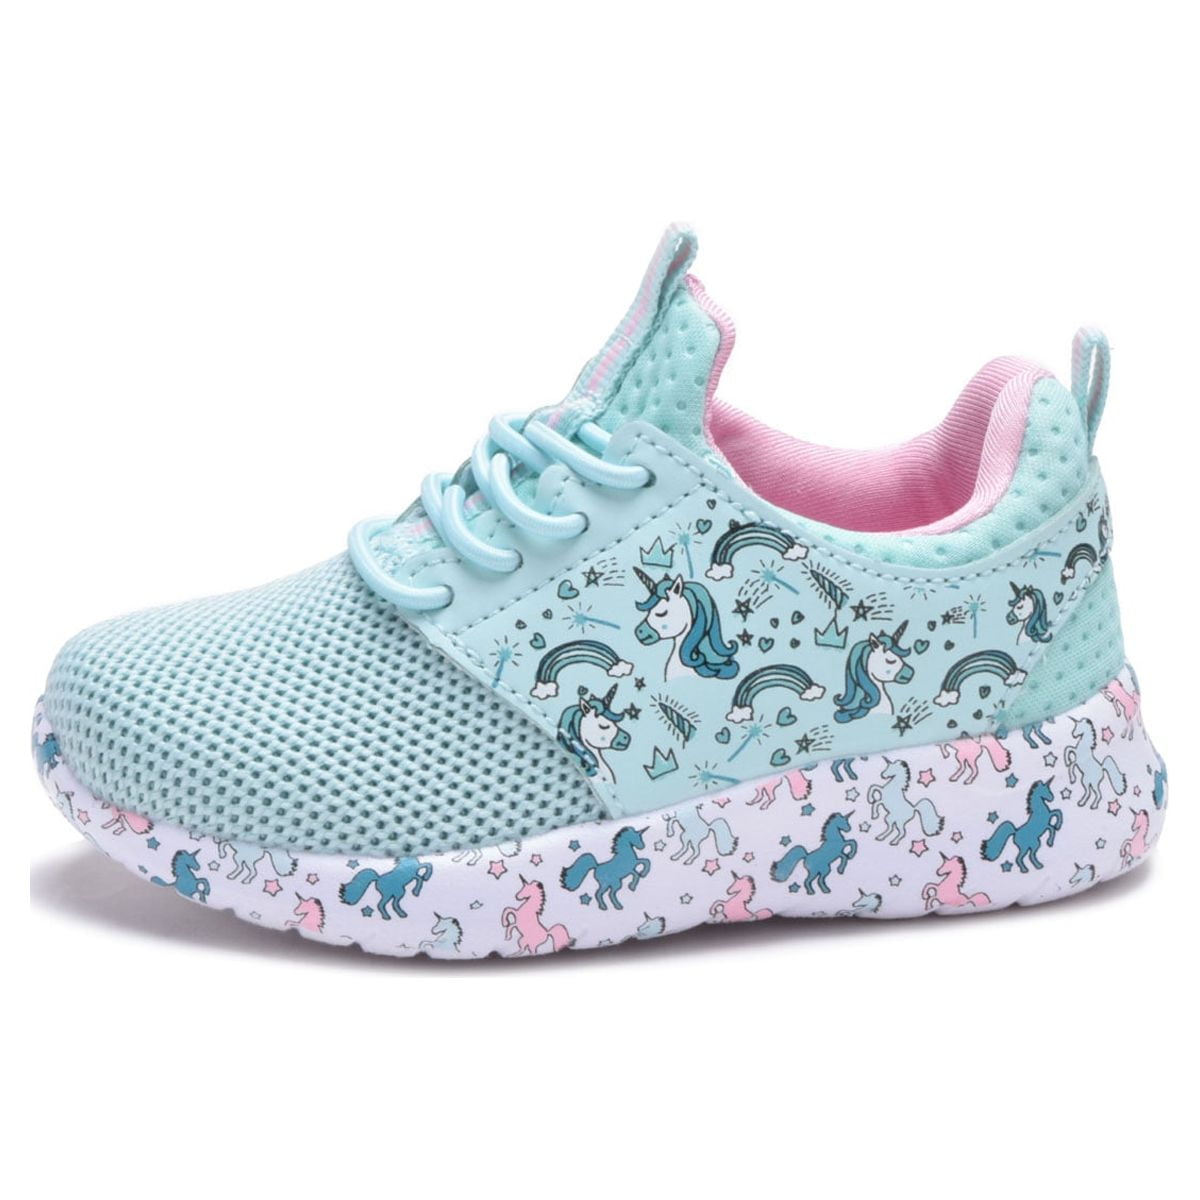  STQ Toddler Girl Shoes Kids Canvas Sneakers Lightweight  Walking Tennis Shoes Purple/Unicorn 5 M US Toddler